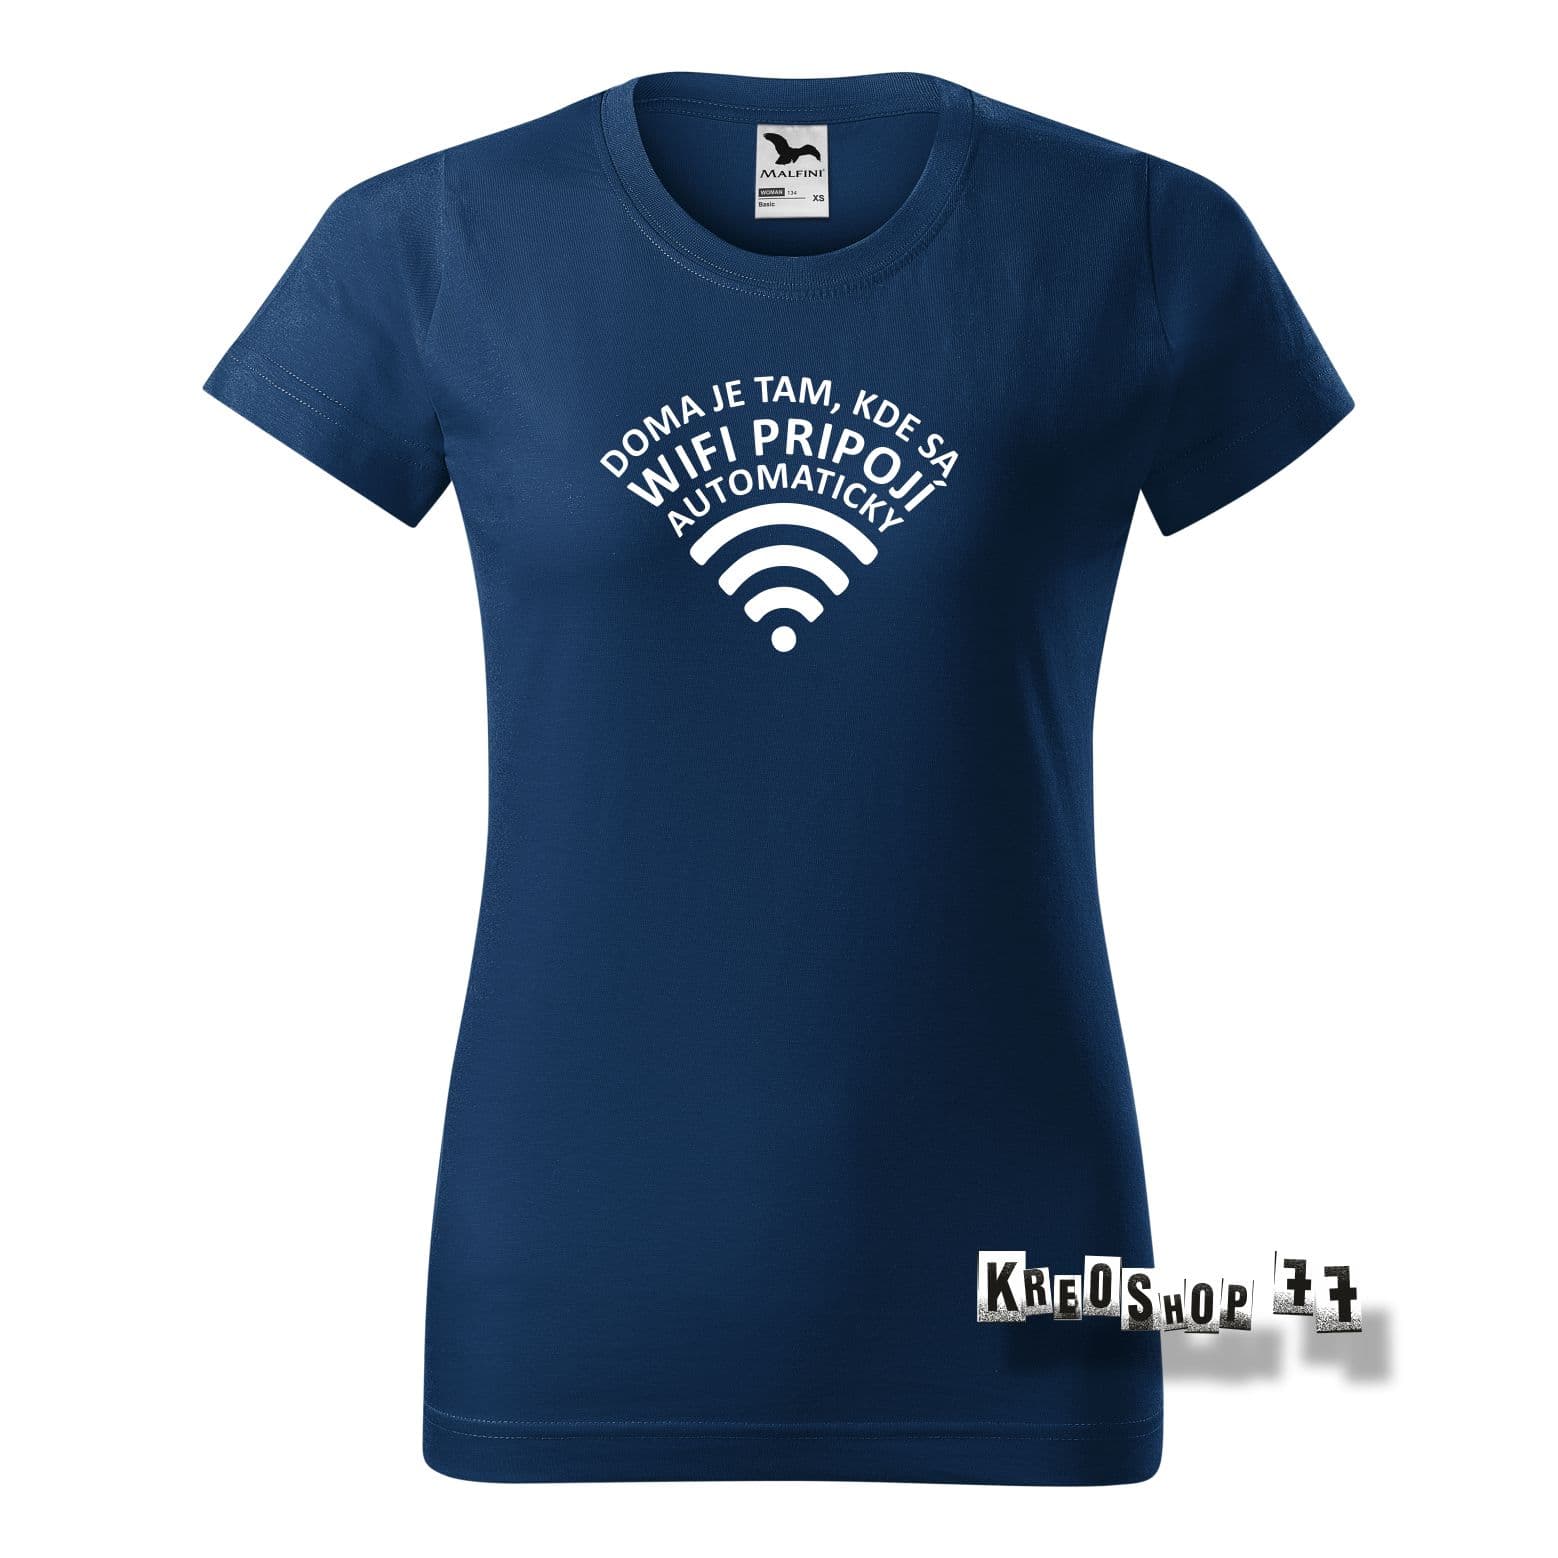 Dámske Tričko - Doma je tam, kde sa wifi pripojí automaticky - Tmavo modré